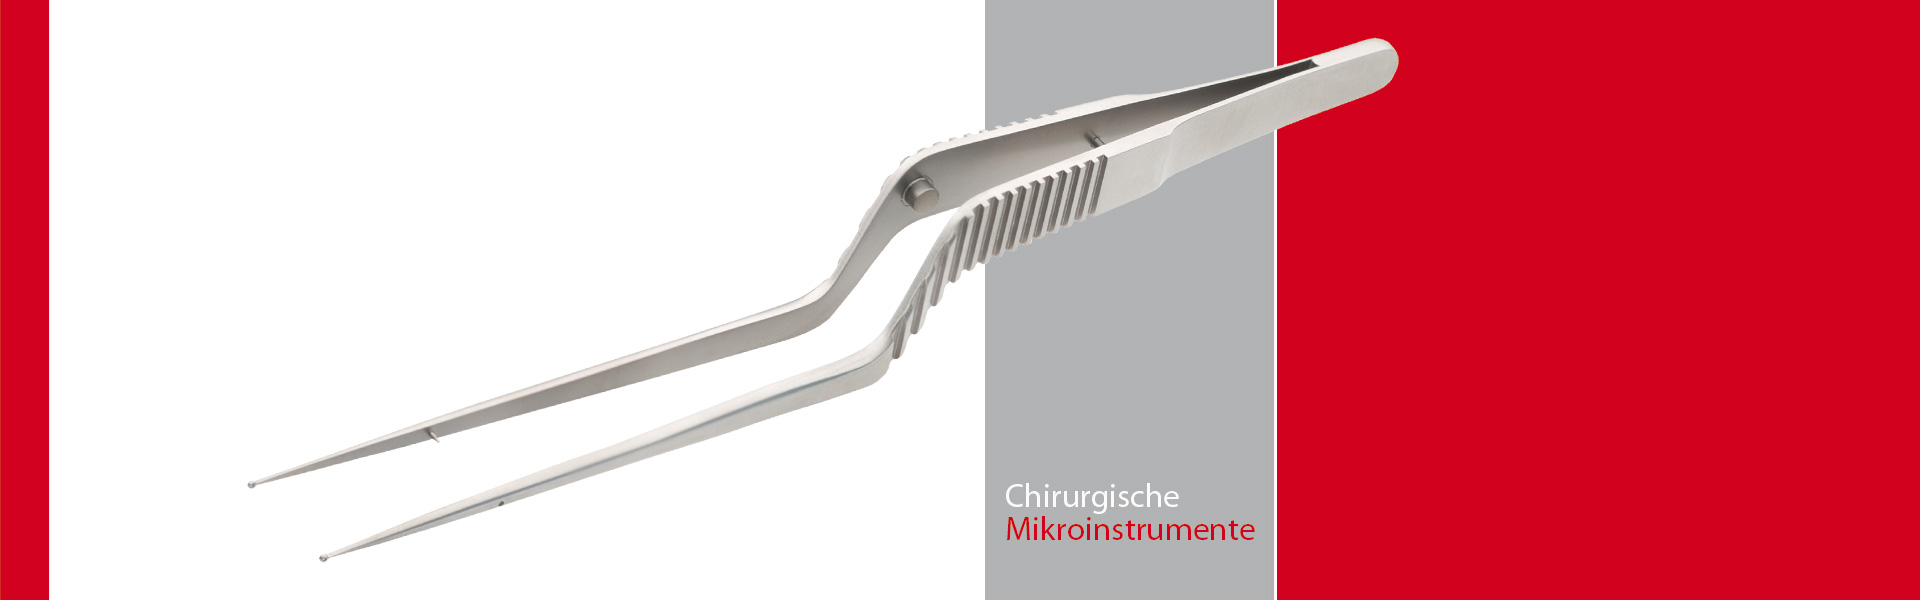 Michael Schilling_Chirurgische Mikroinstrumente